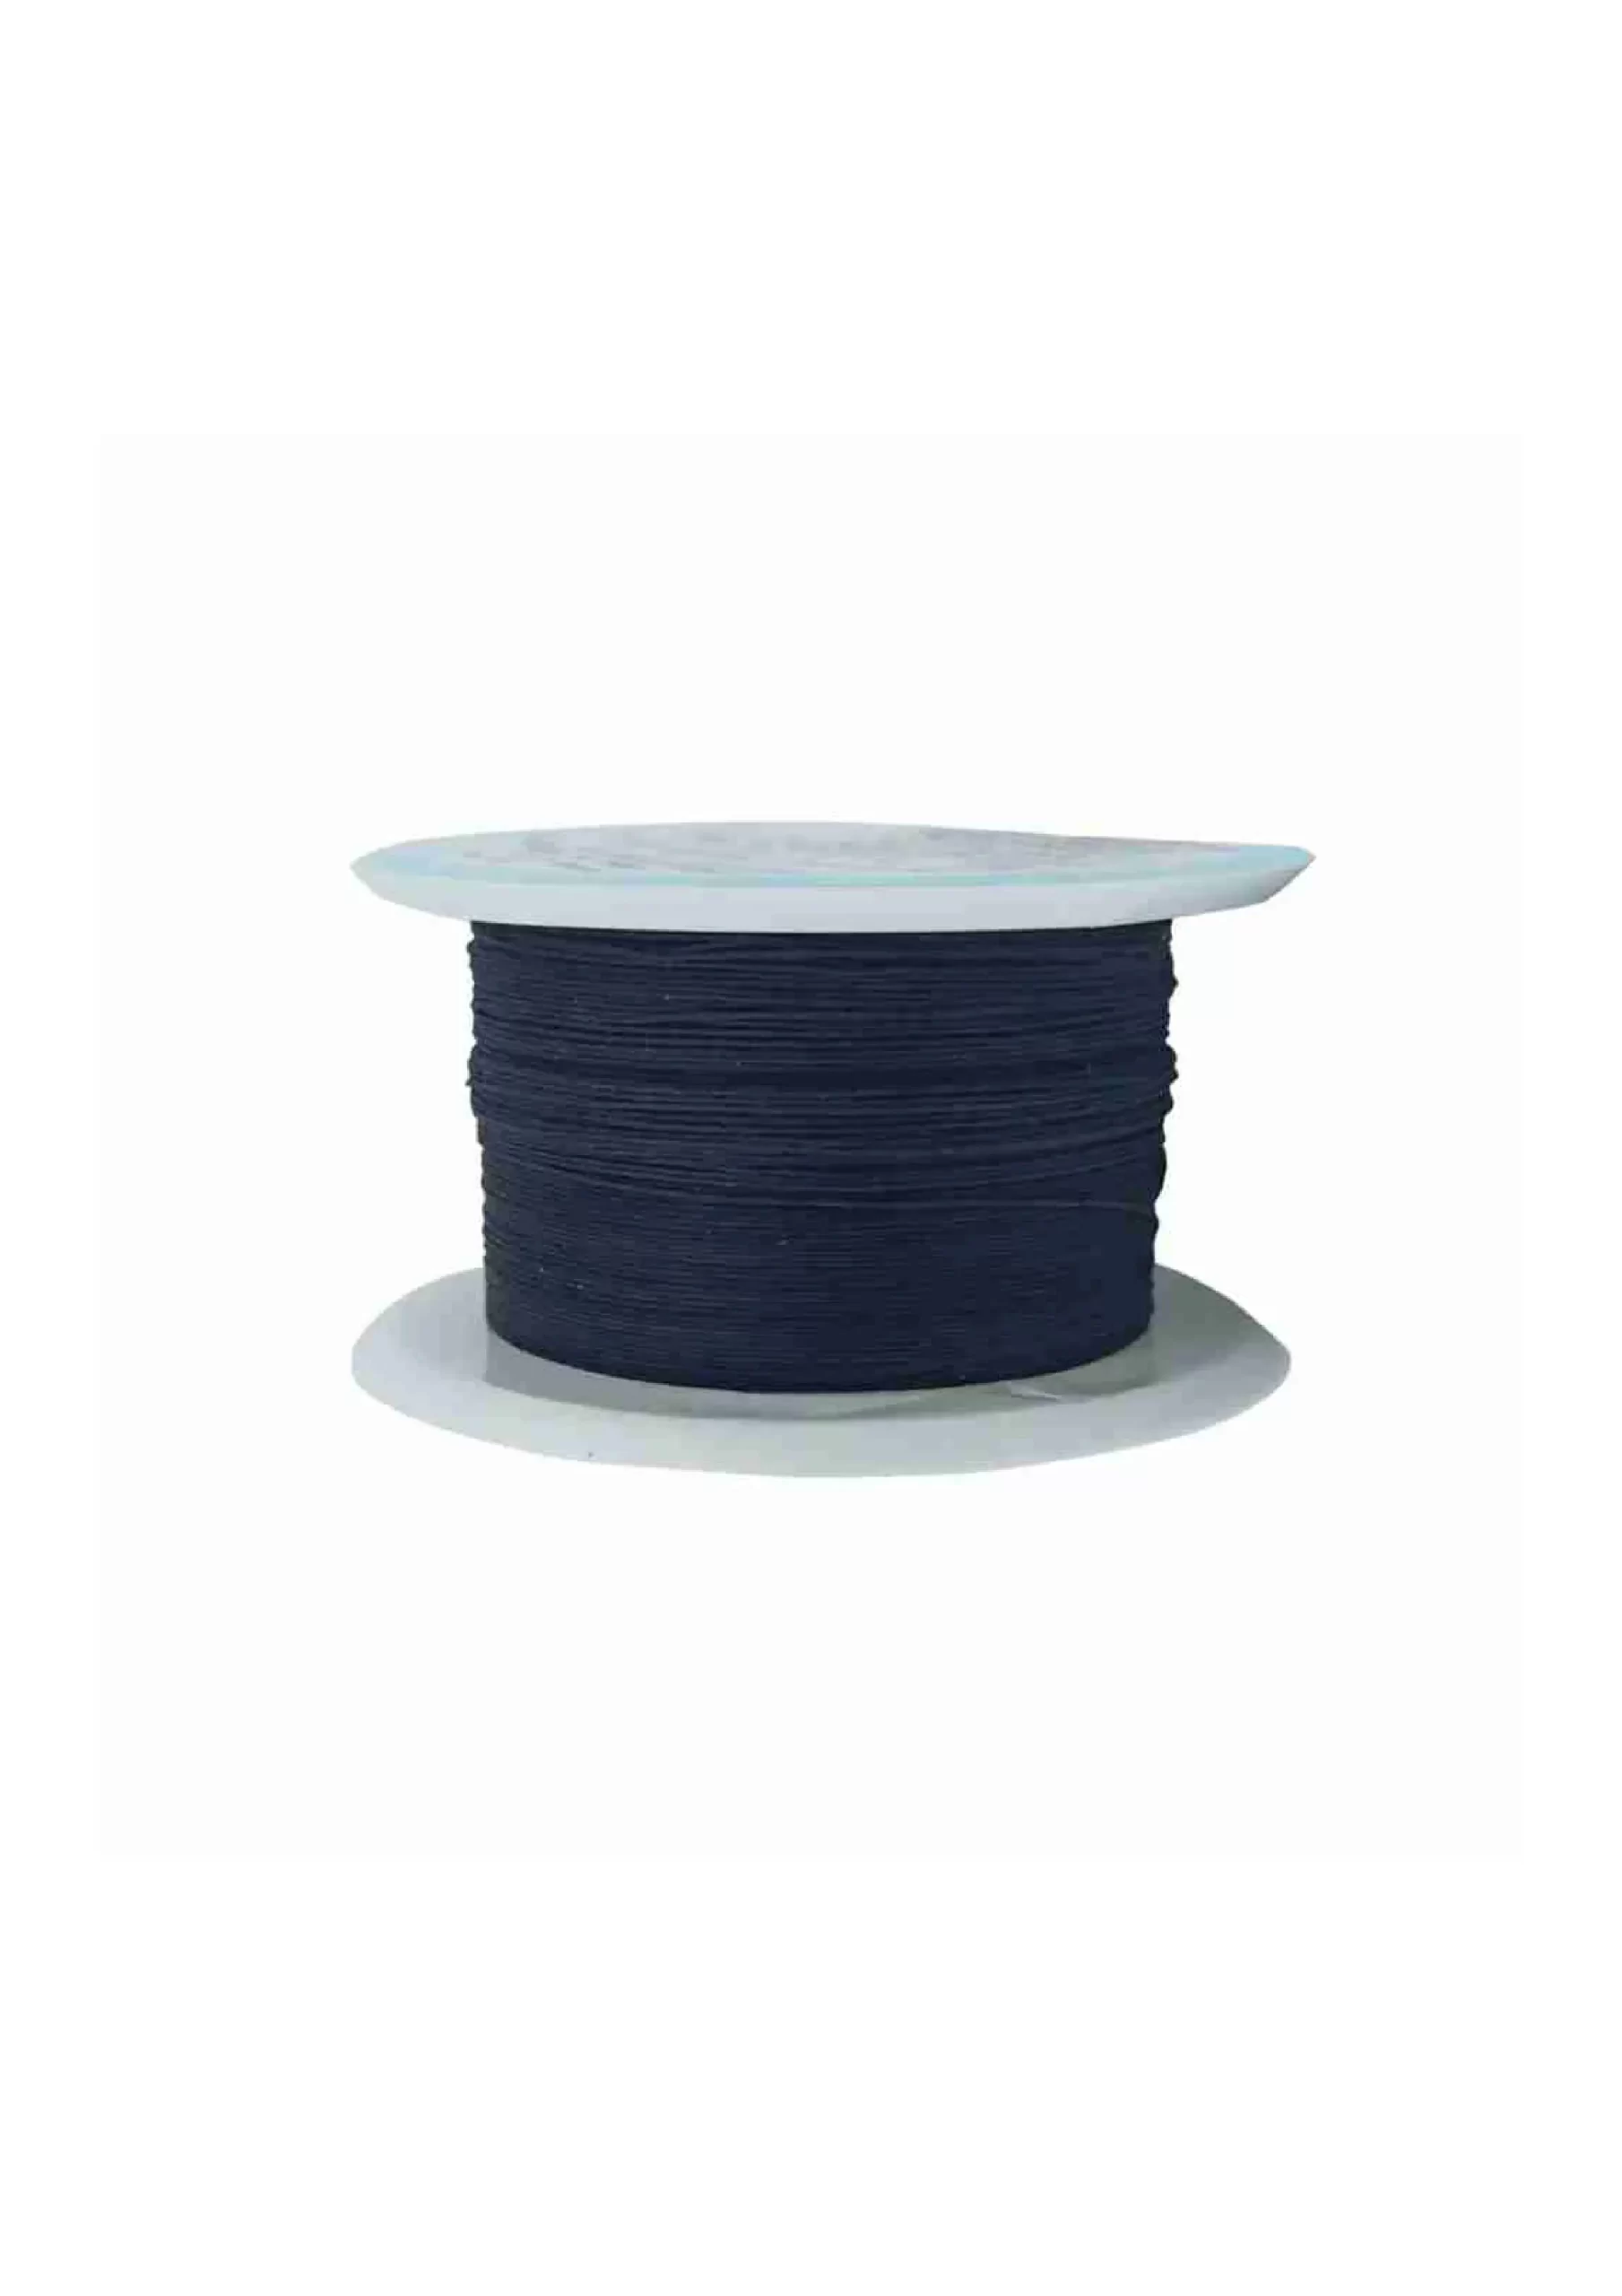 Black braided silk suture thread 3-0 10M - Lifeline